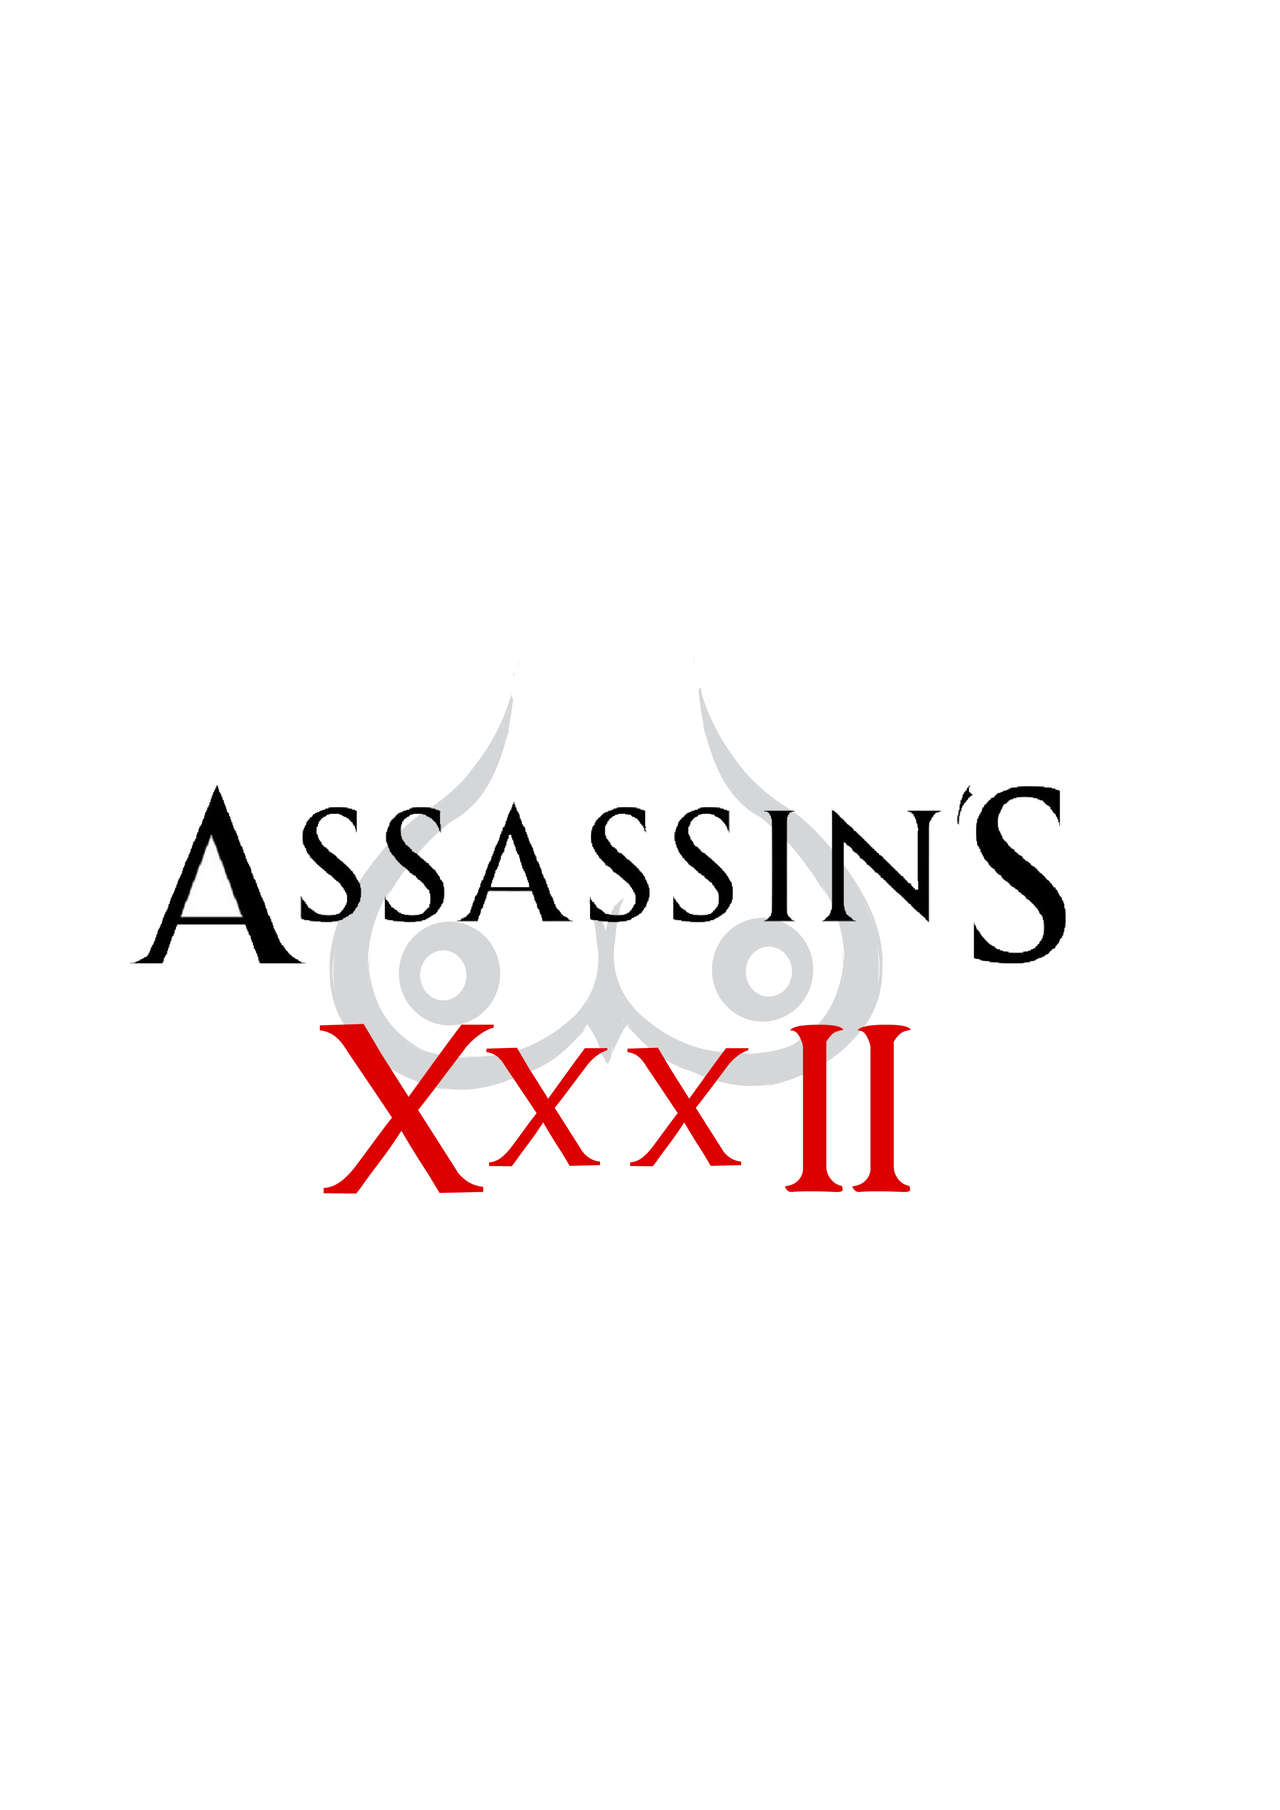 [Torn_S] Assassin's XXX II (Assassin's Creed) 